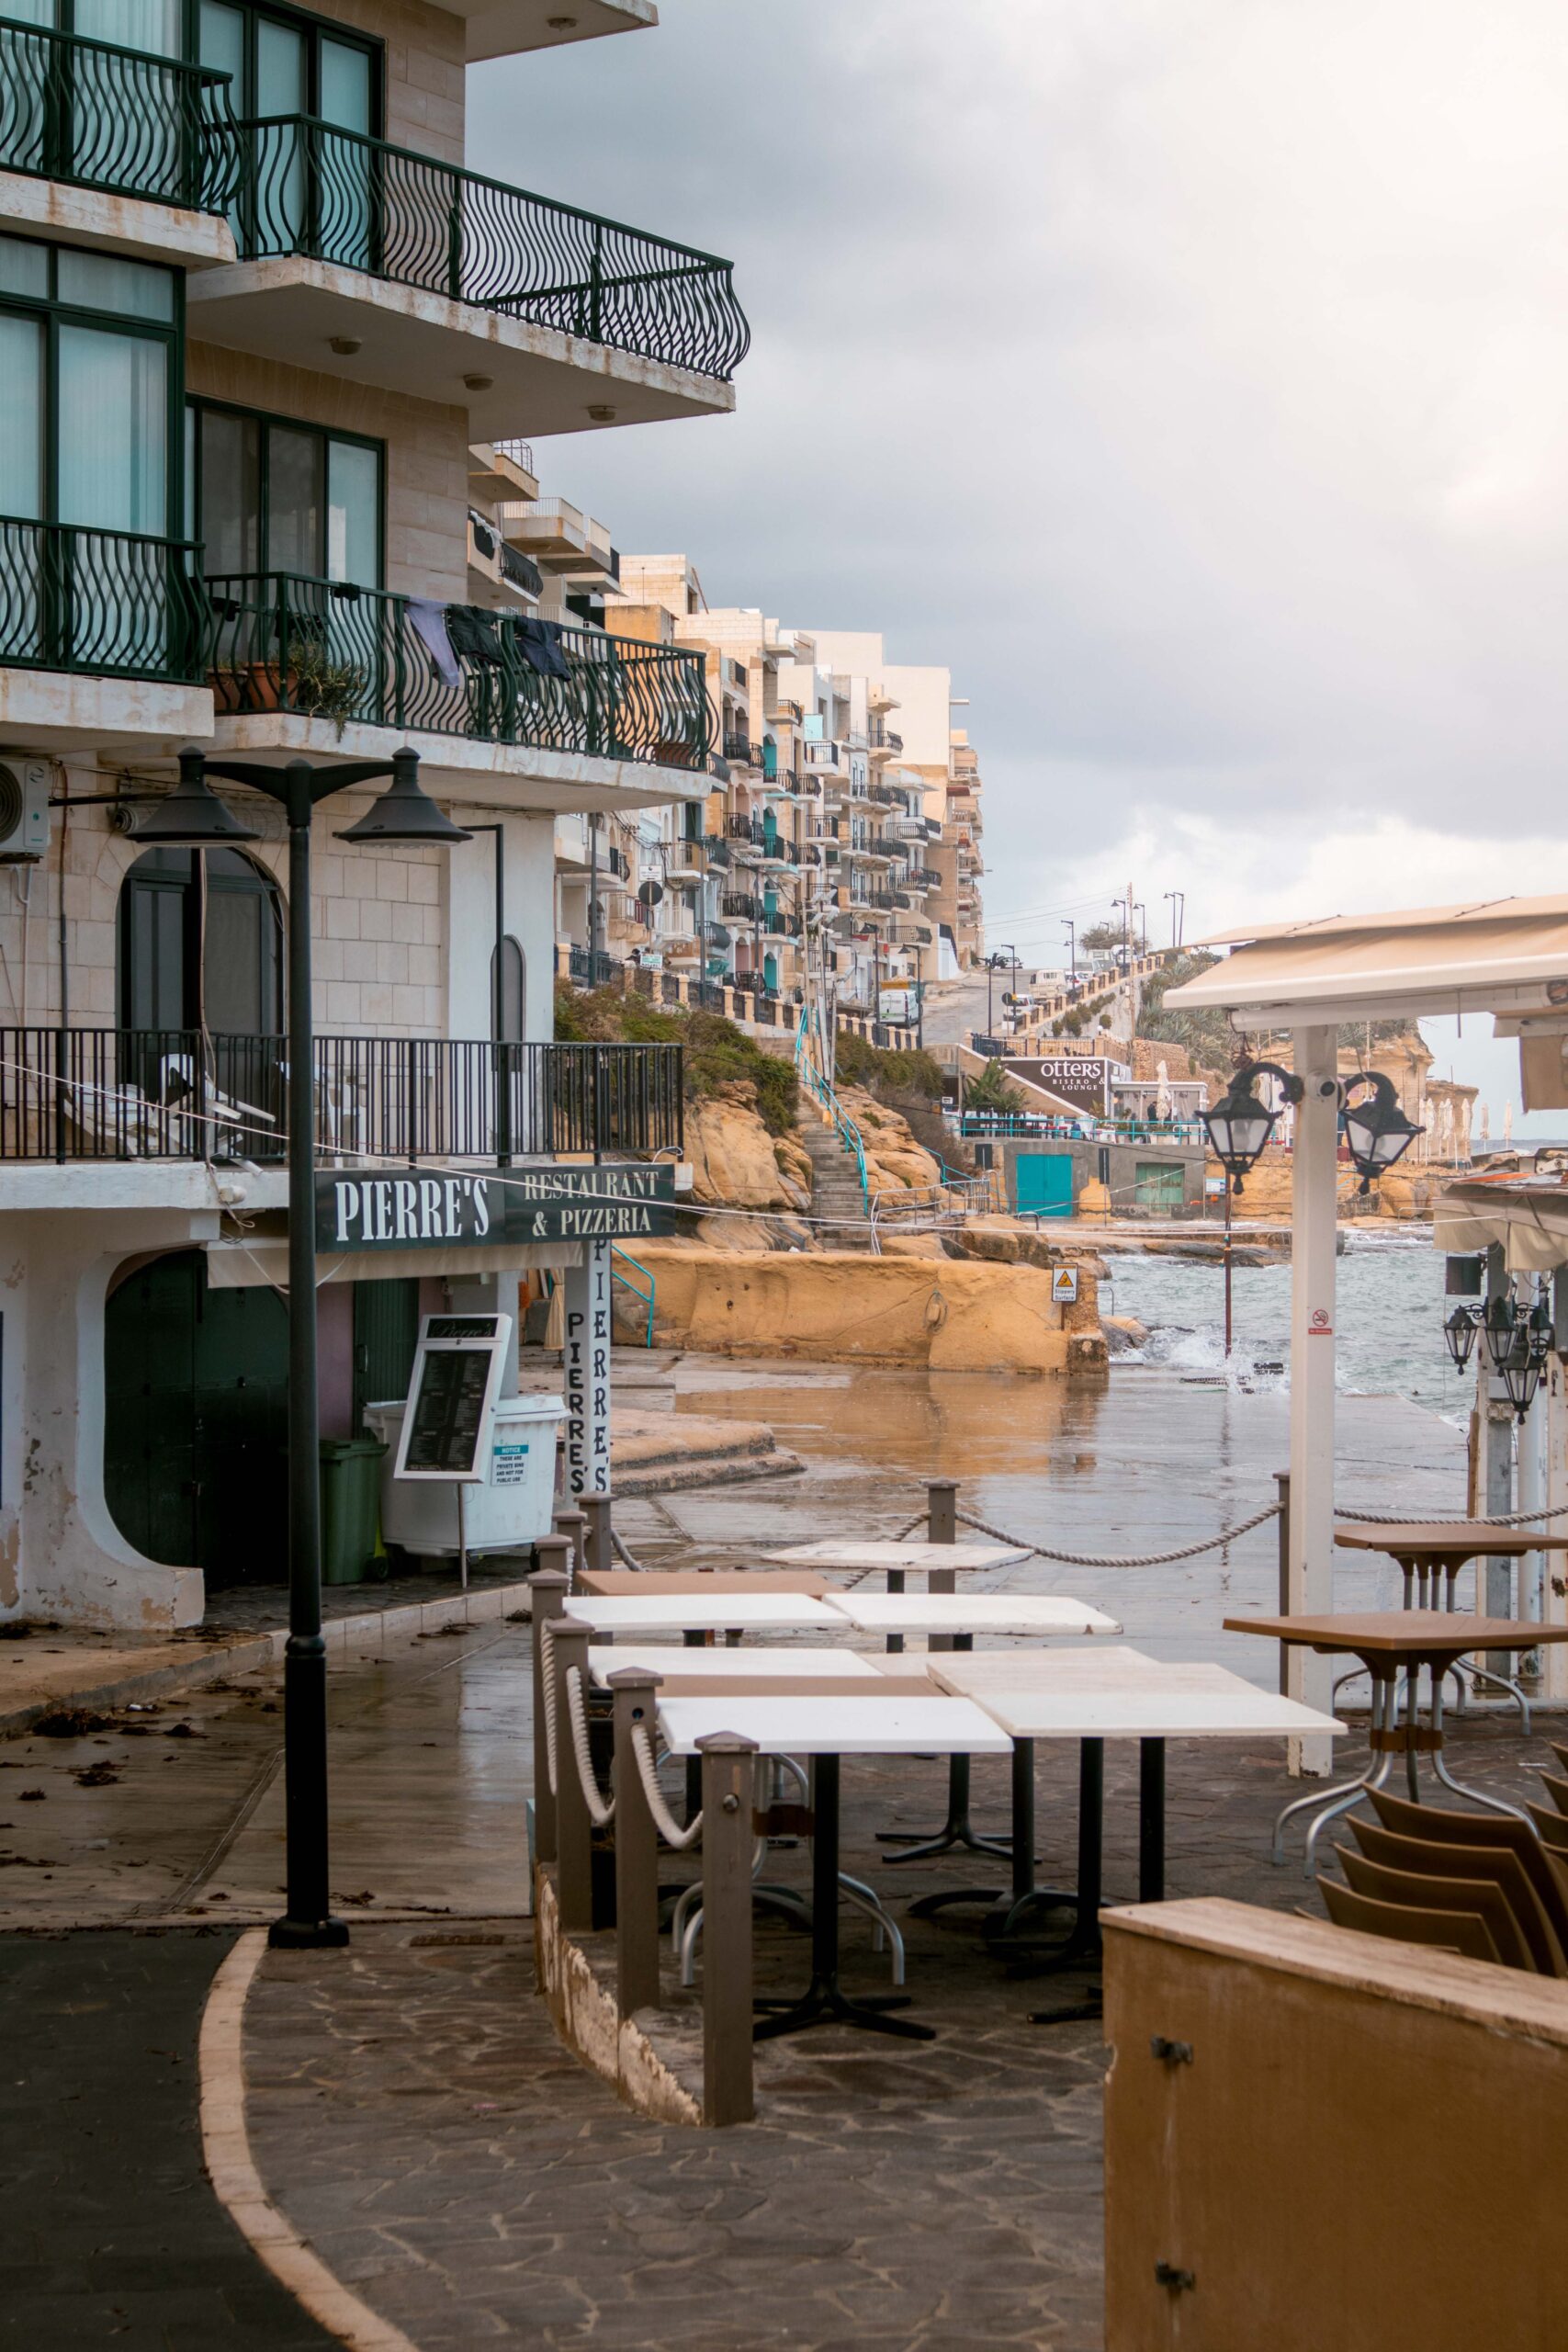 Seaside restaurants and buildings in Marsalforn on Gozo island, Malta